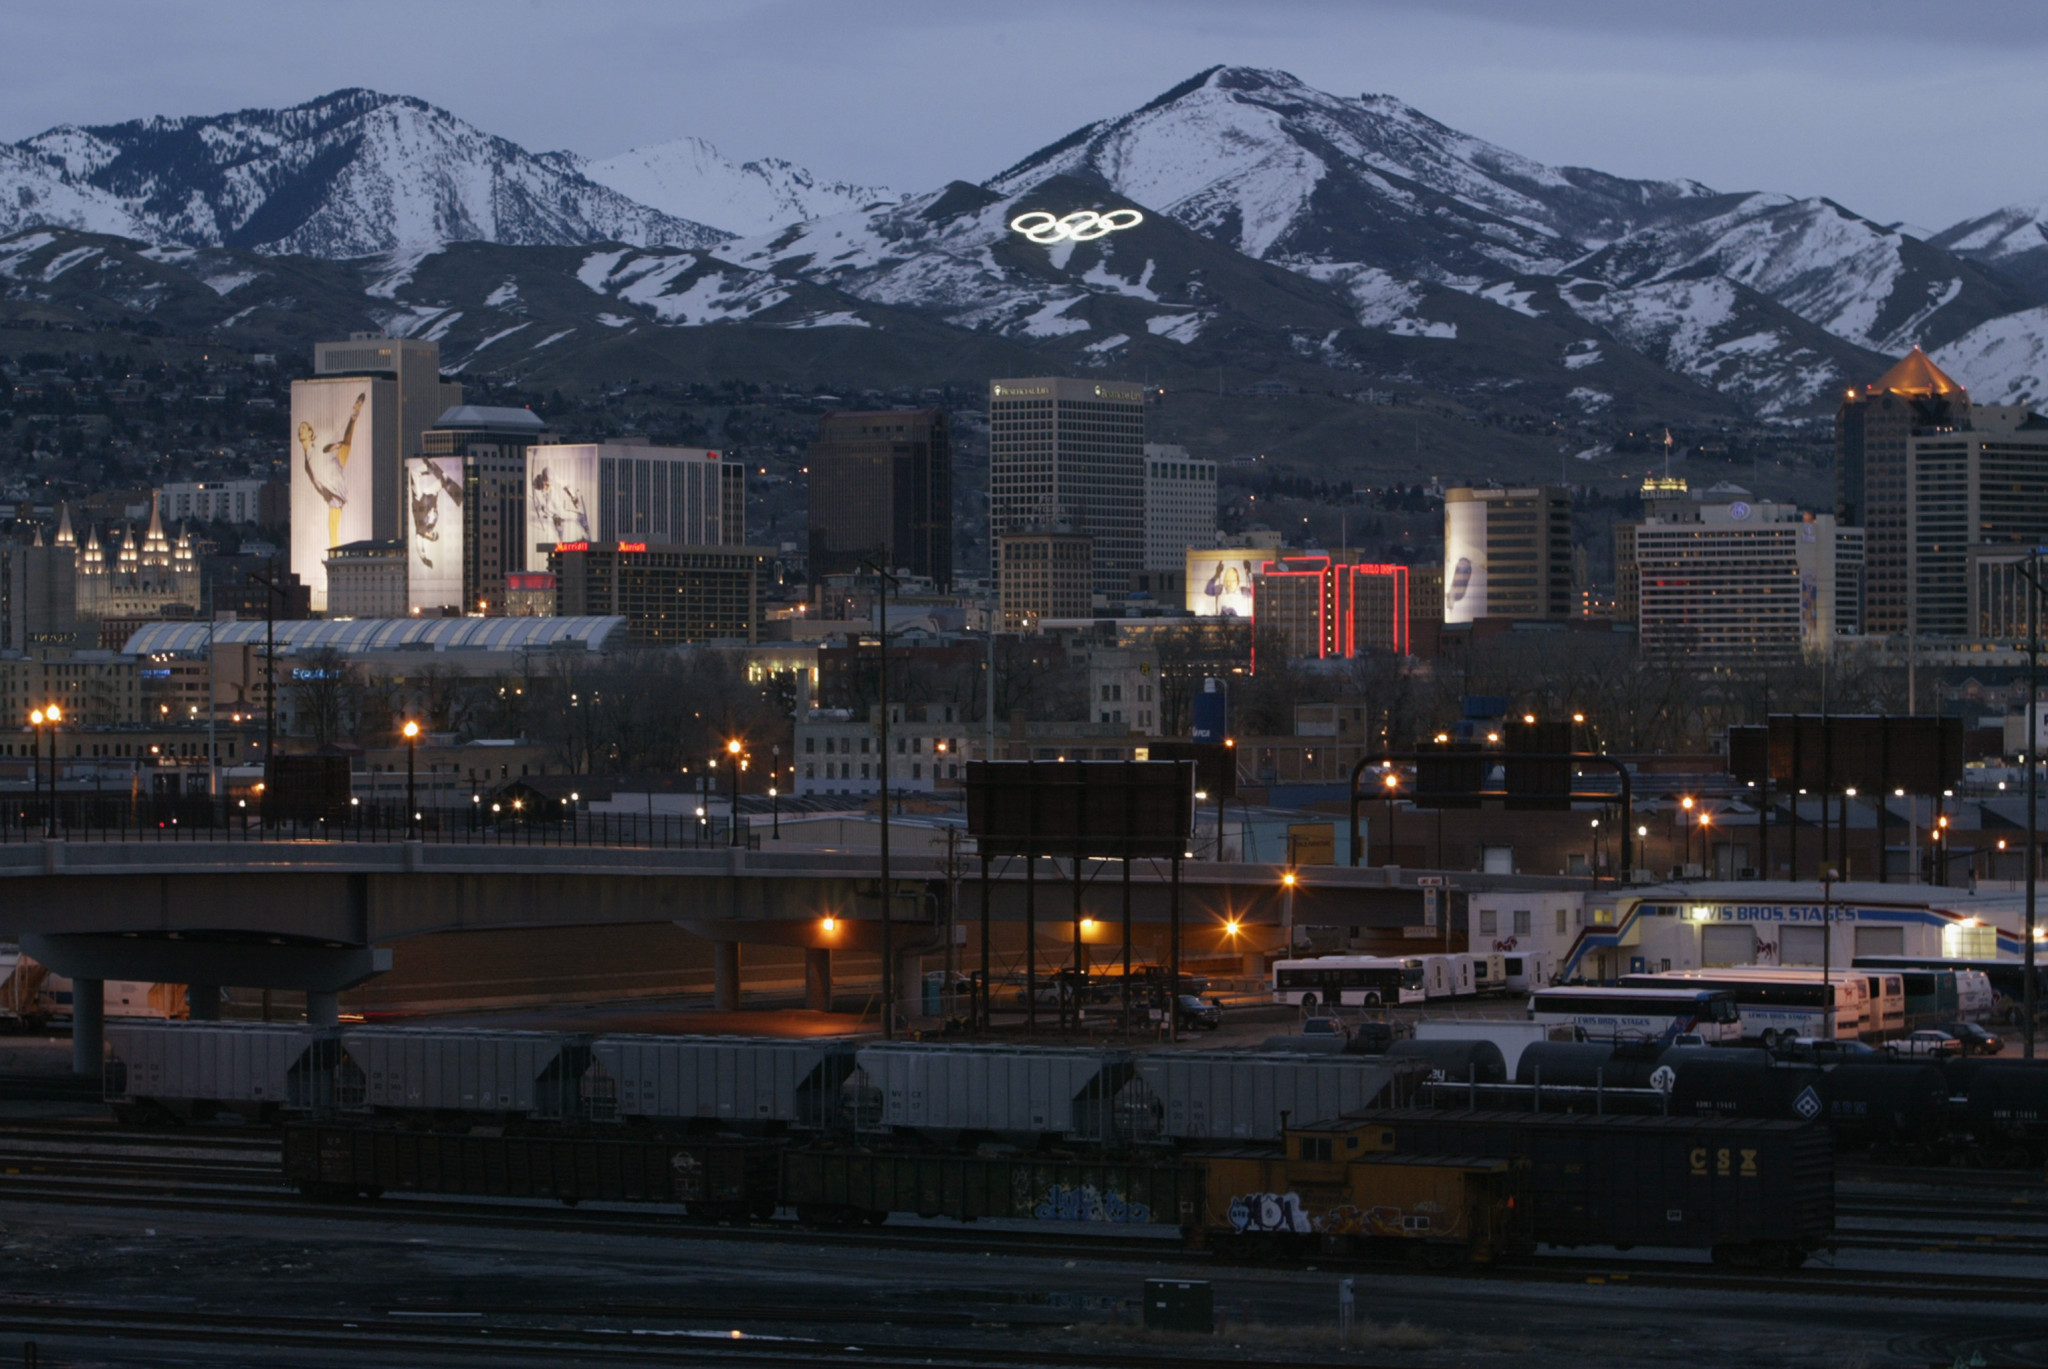 USOPC leans towards 2030 in Salt Lake City Winter Olympic bid